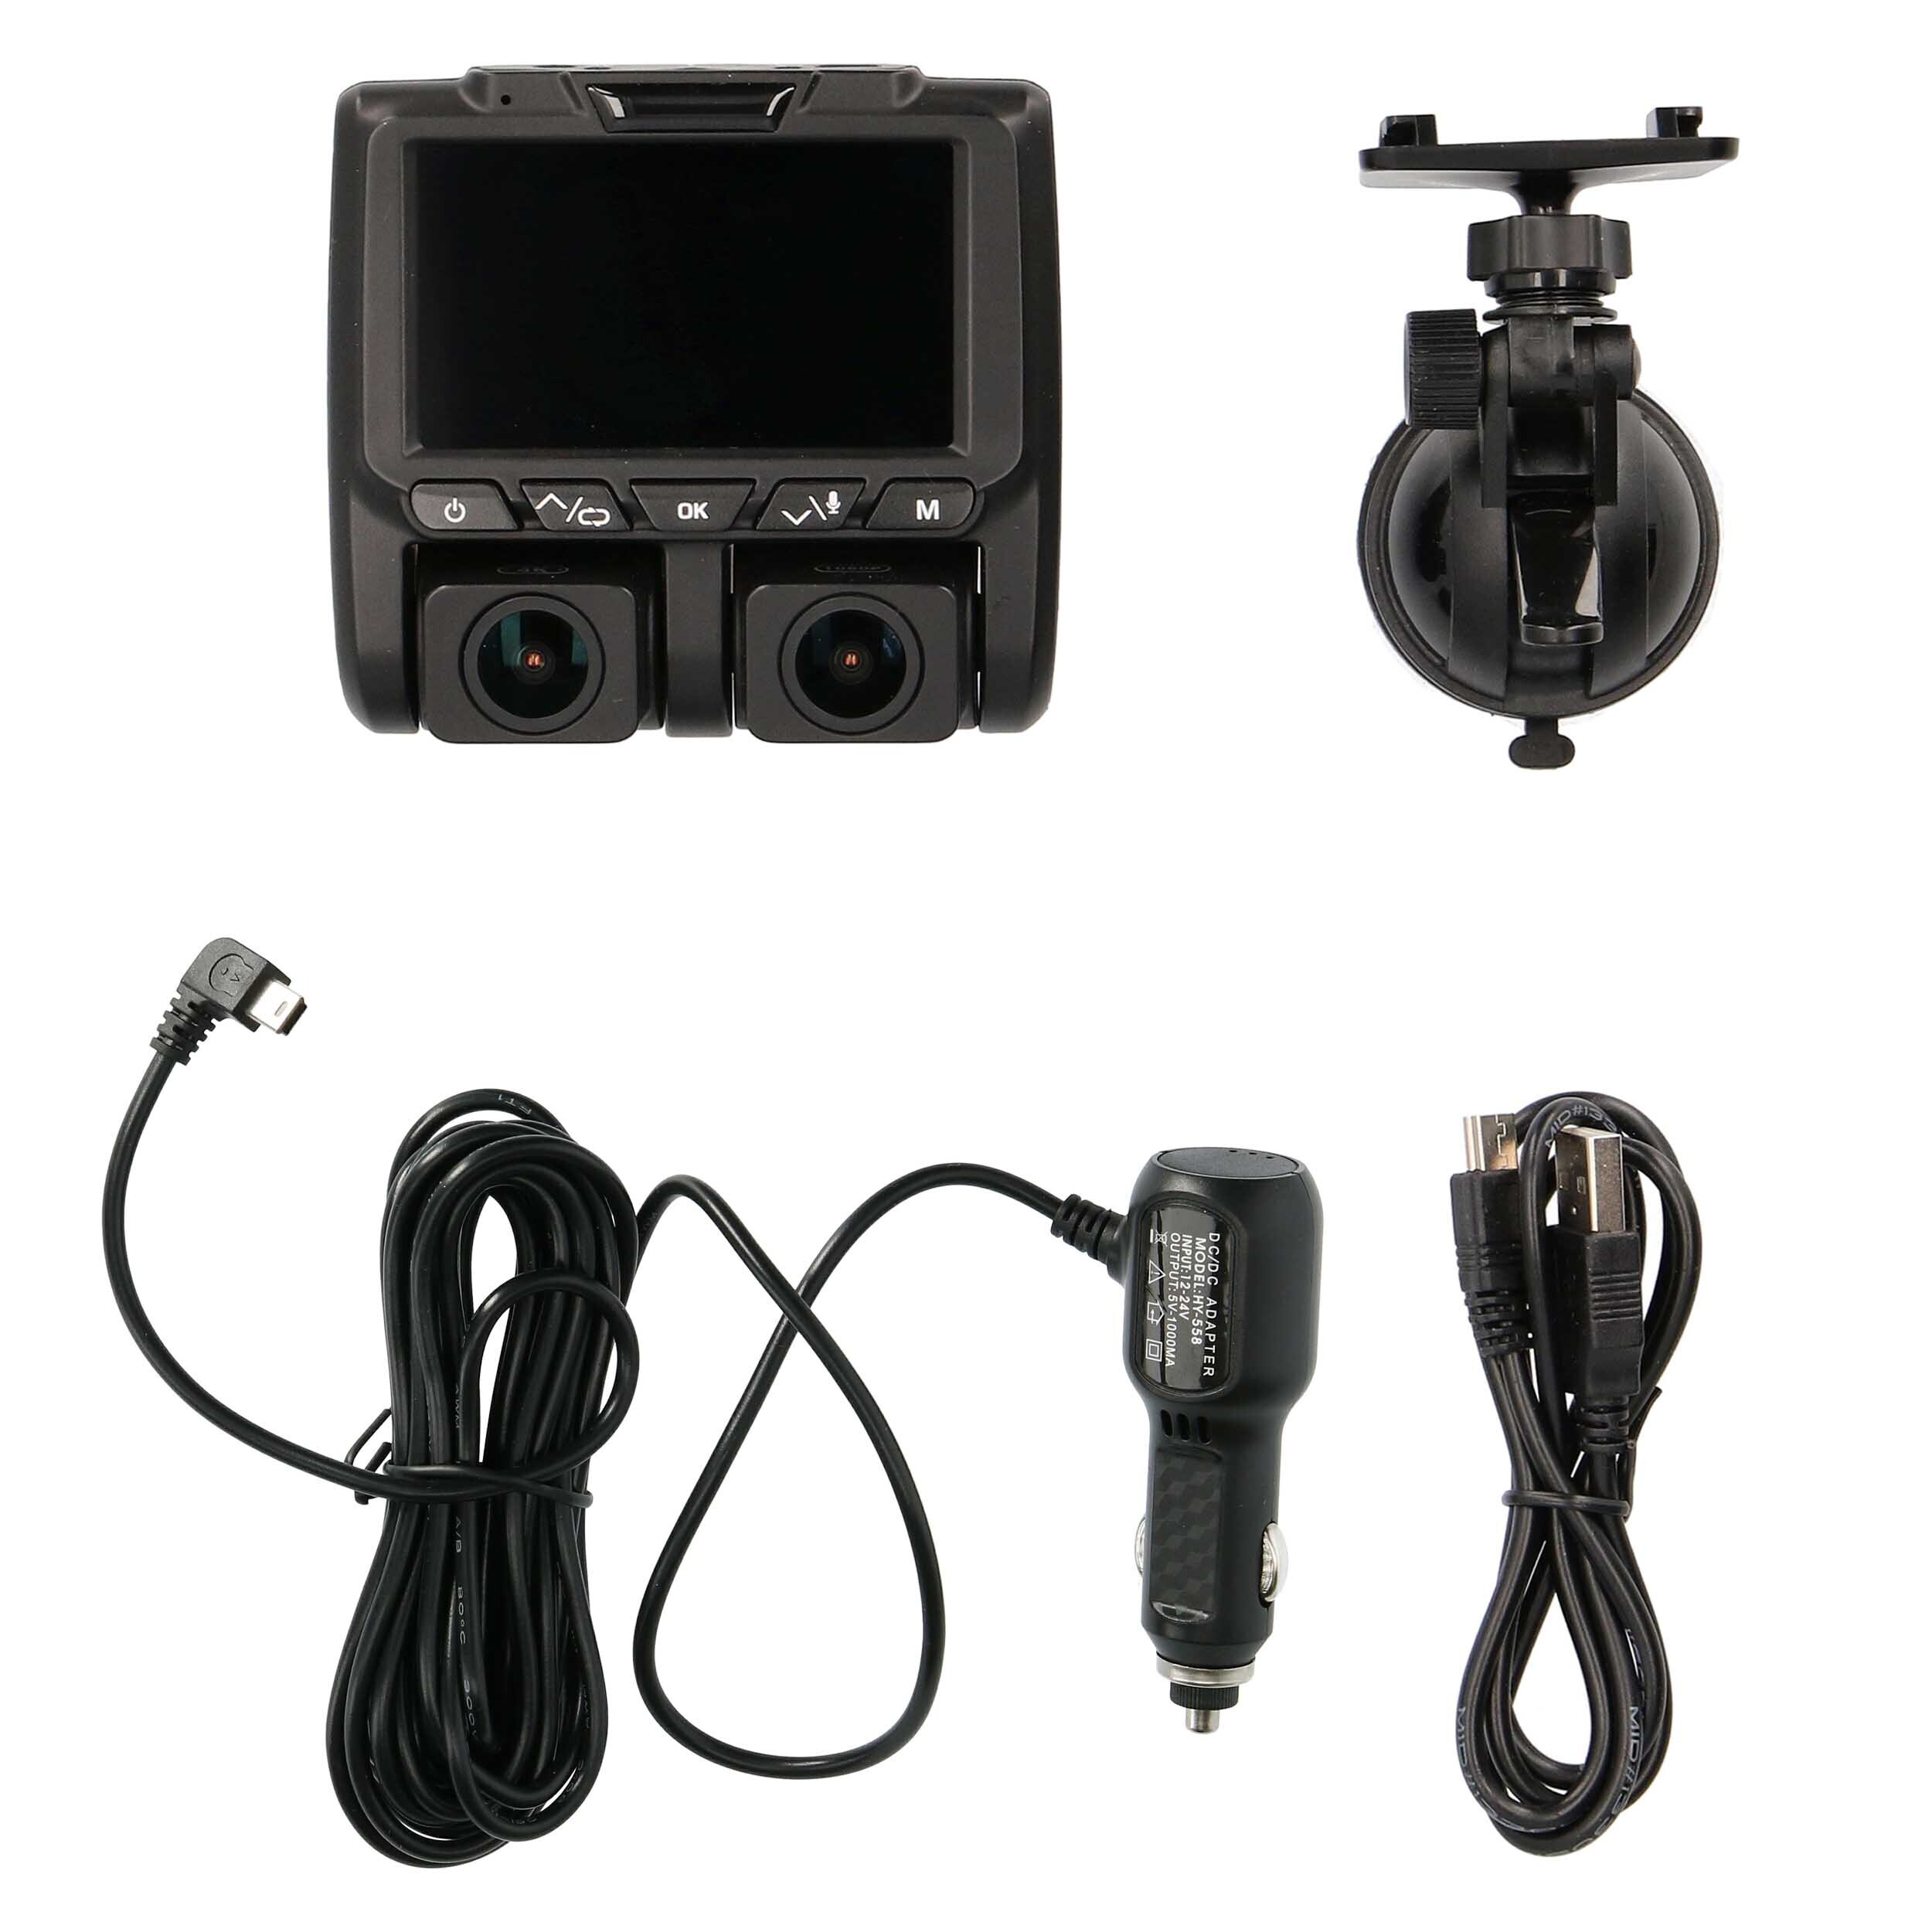 Universal Dash Cam Quick Installation Kit